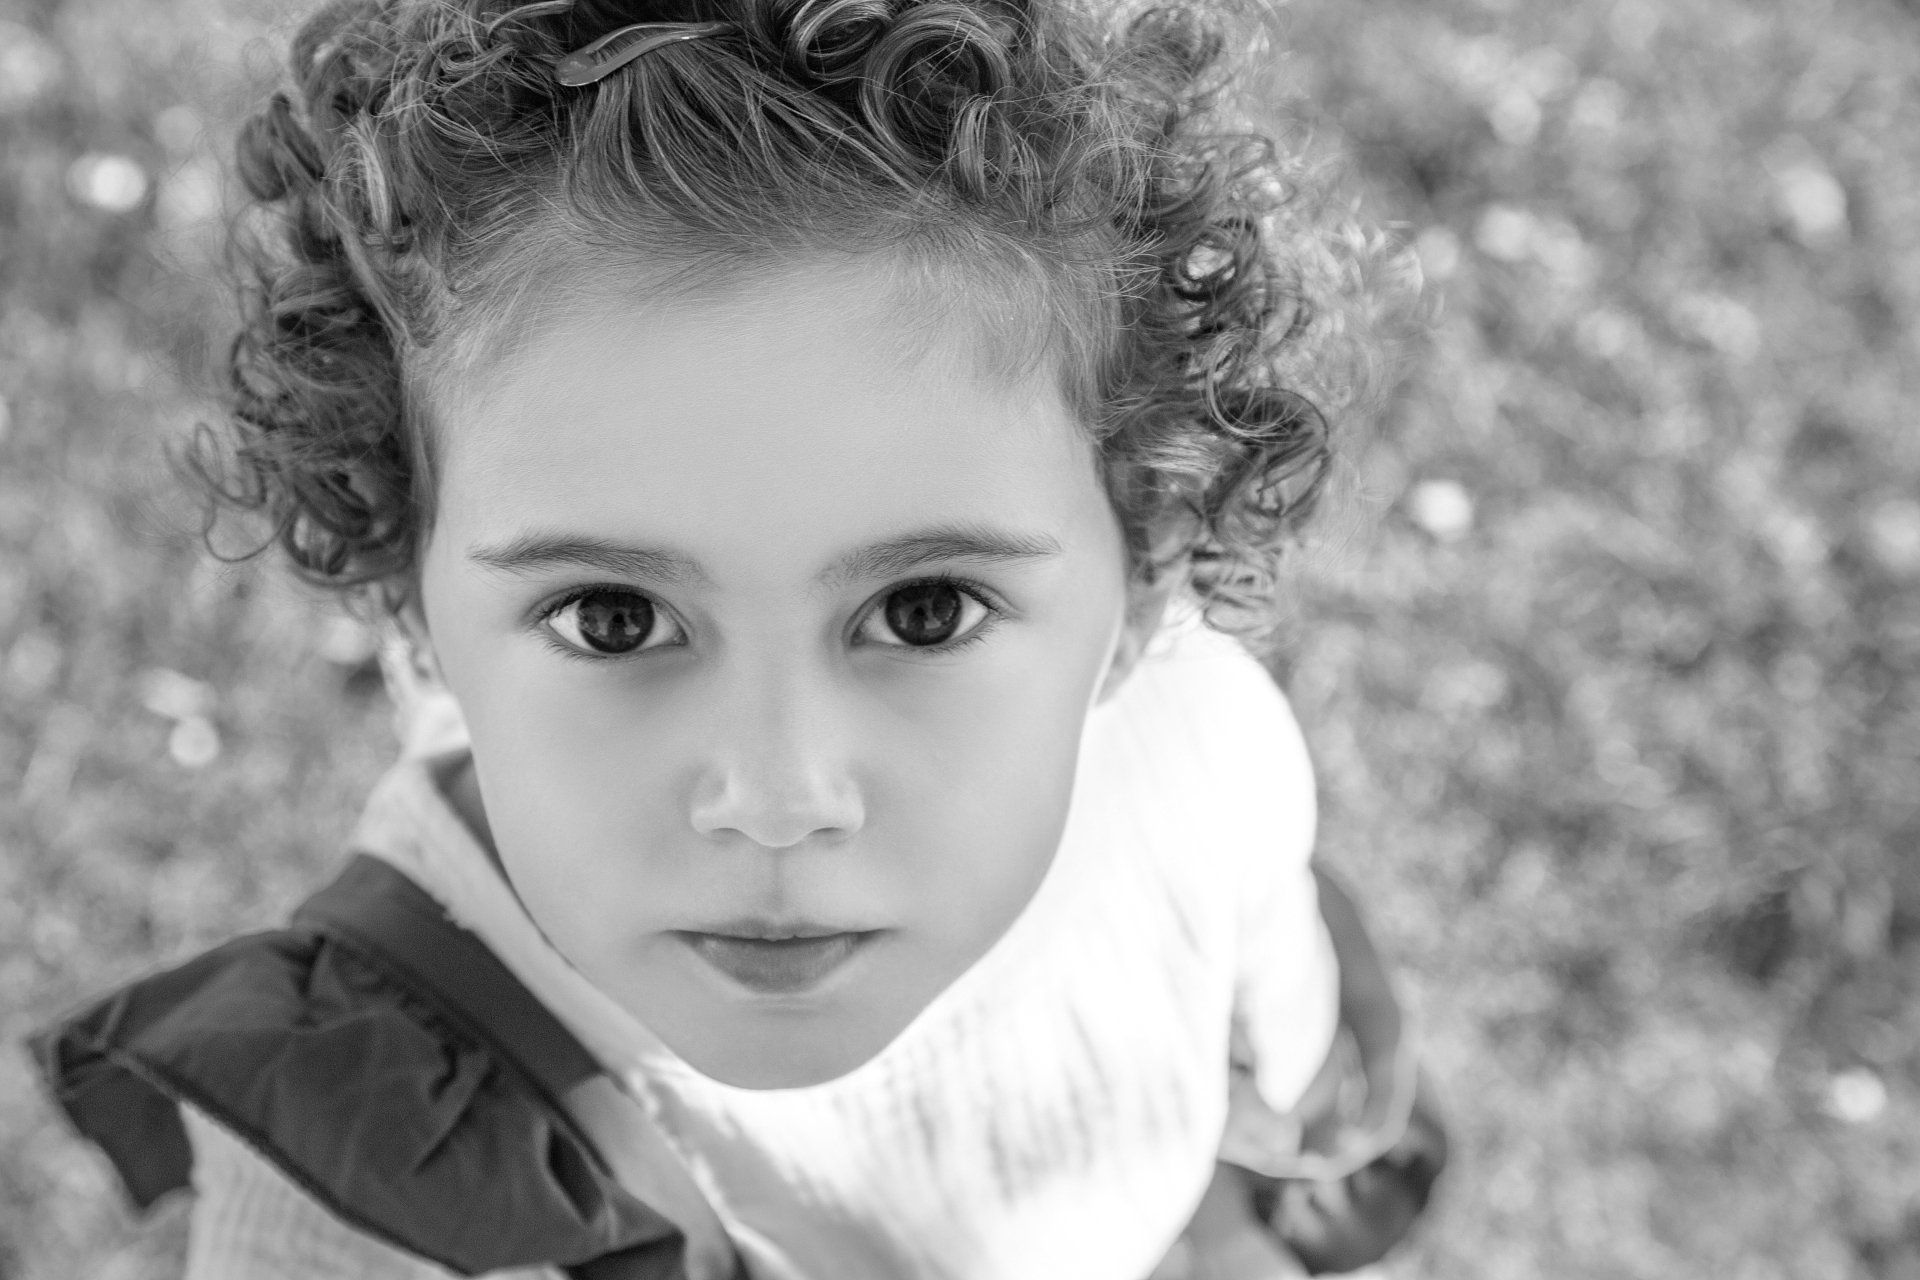 Natalie-DAngelo-Photography-Vancouver-BC-Canada-BlackWhite-Family-Portraits-Visual-Storyteller-young-girl-portrait-beautiful-eyes